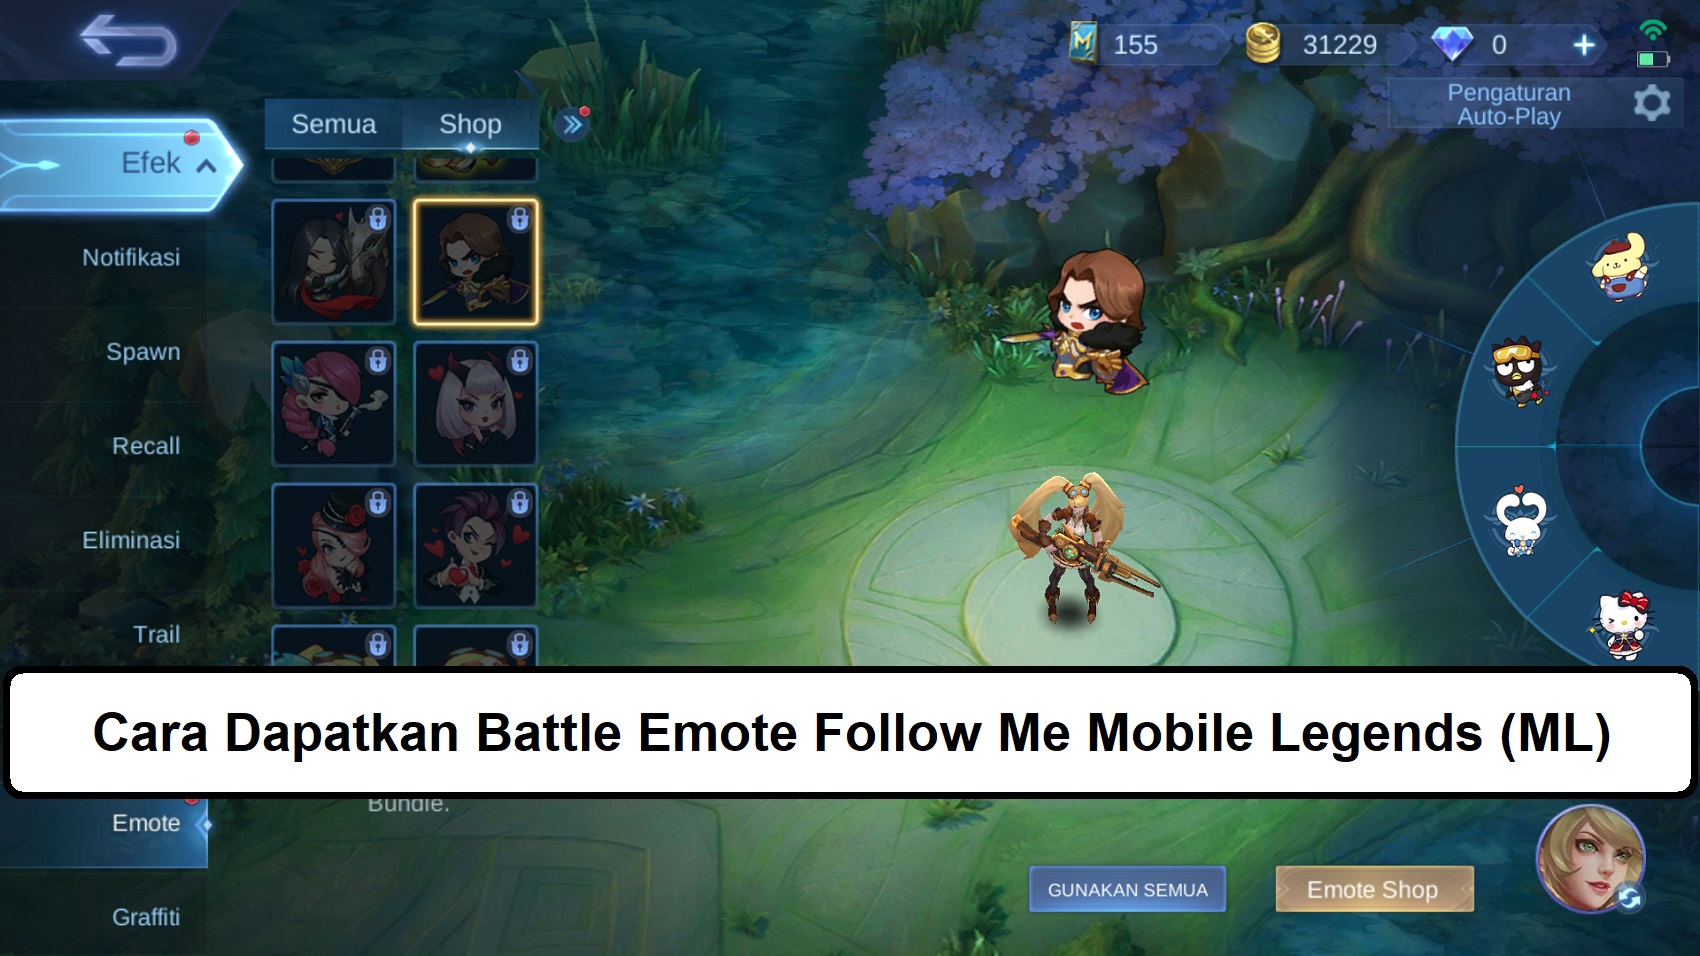 Cara Dapatkan Battle Emote Follow Me Mobile Legends (ML)